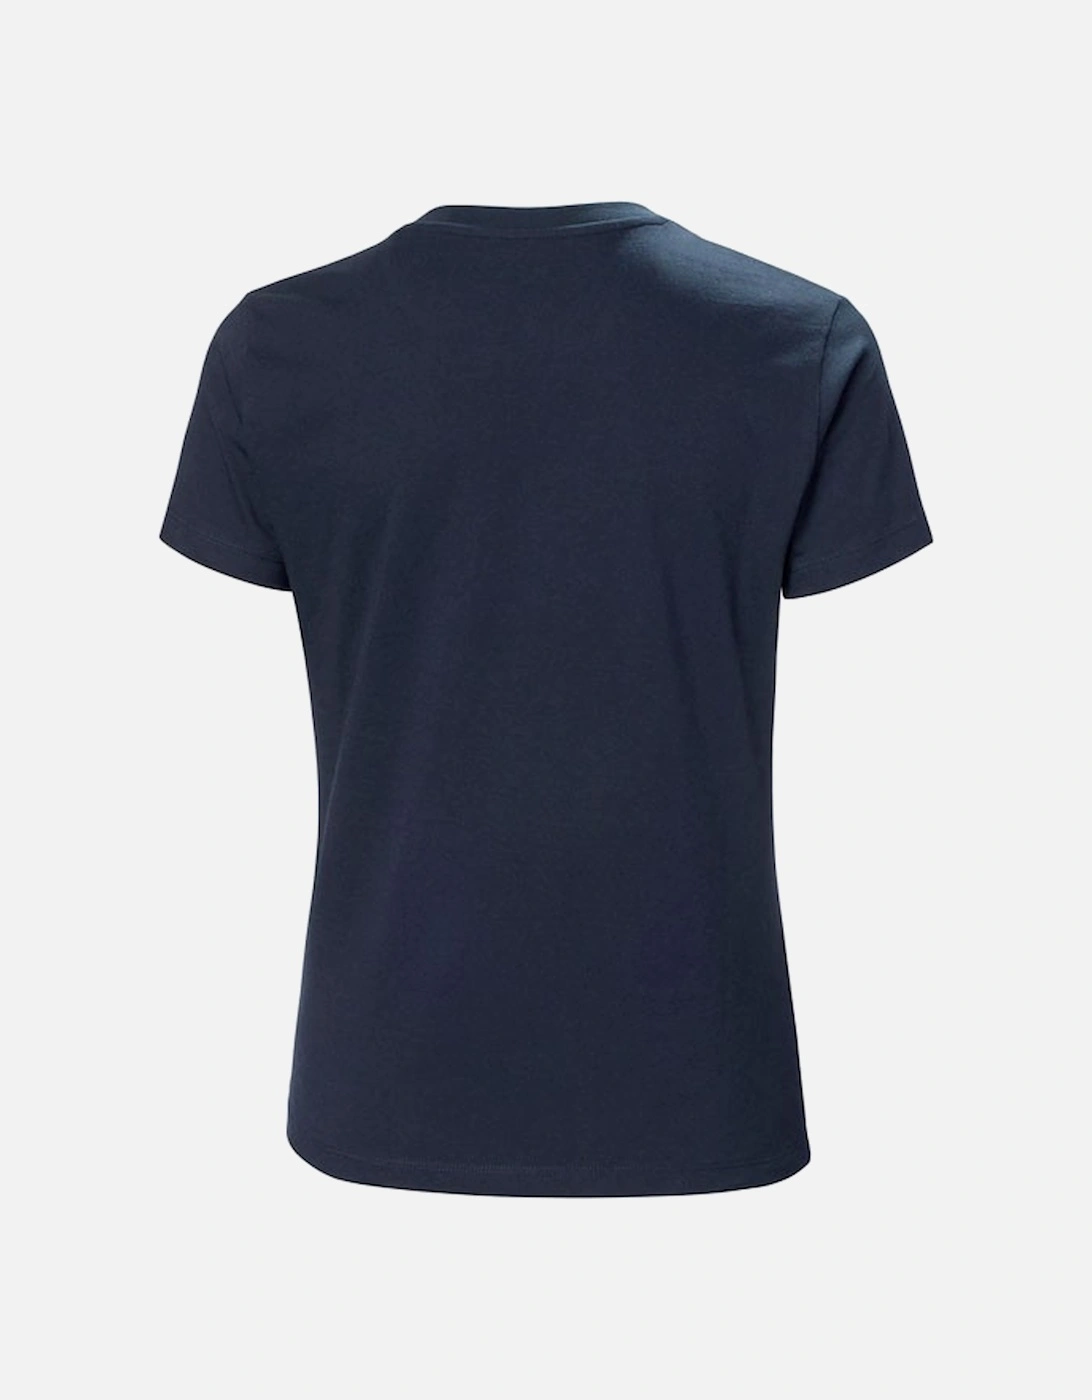 Women's Organic Cotton T-Shirt Navy